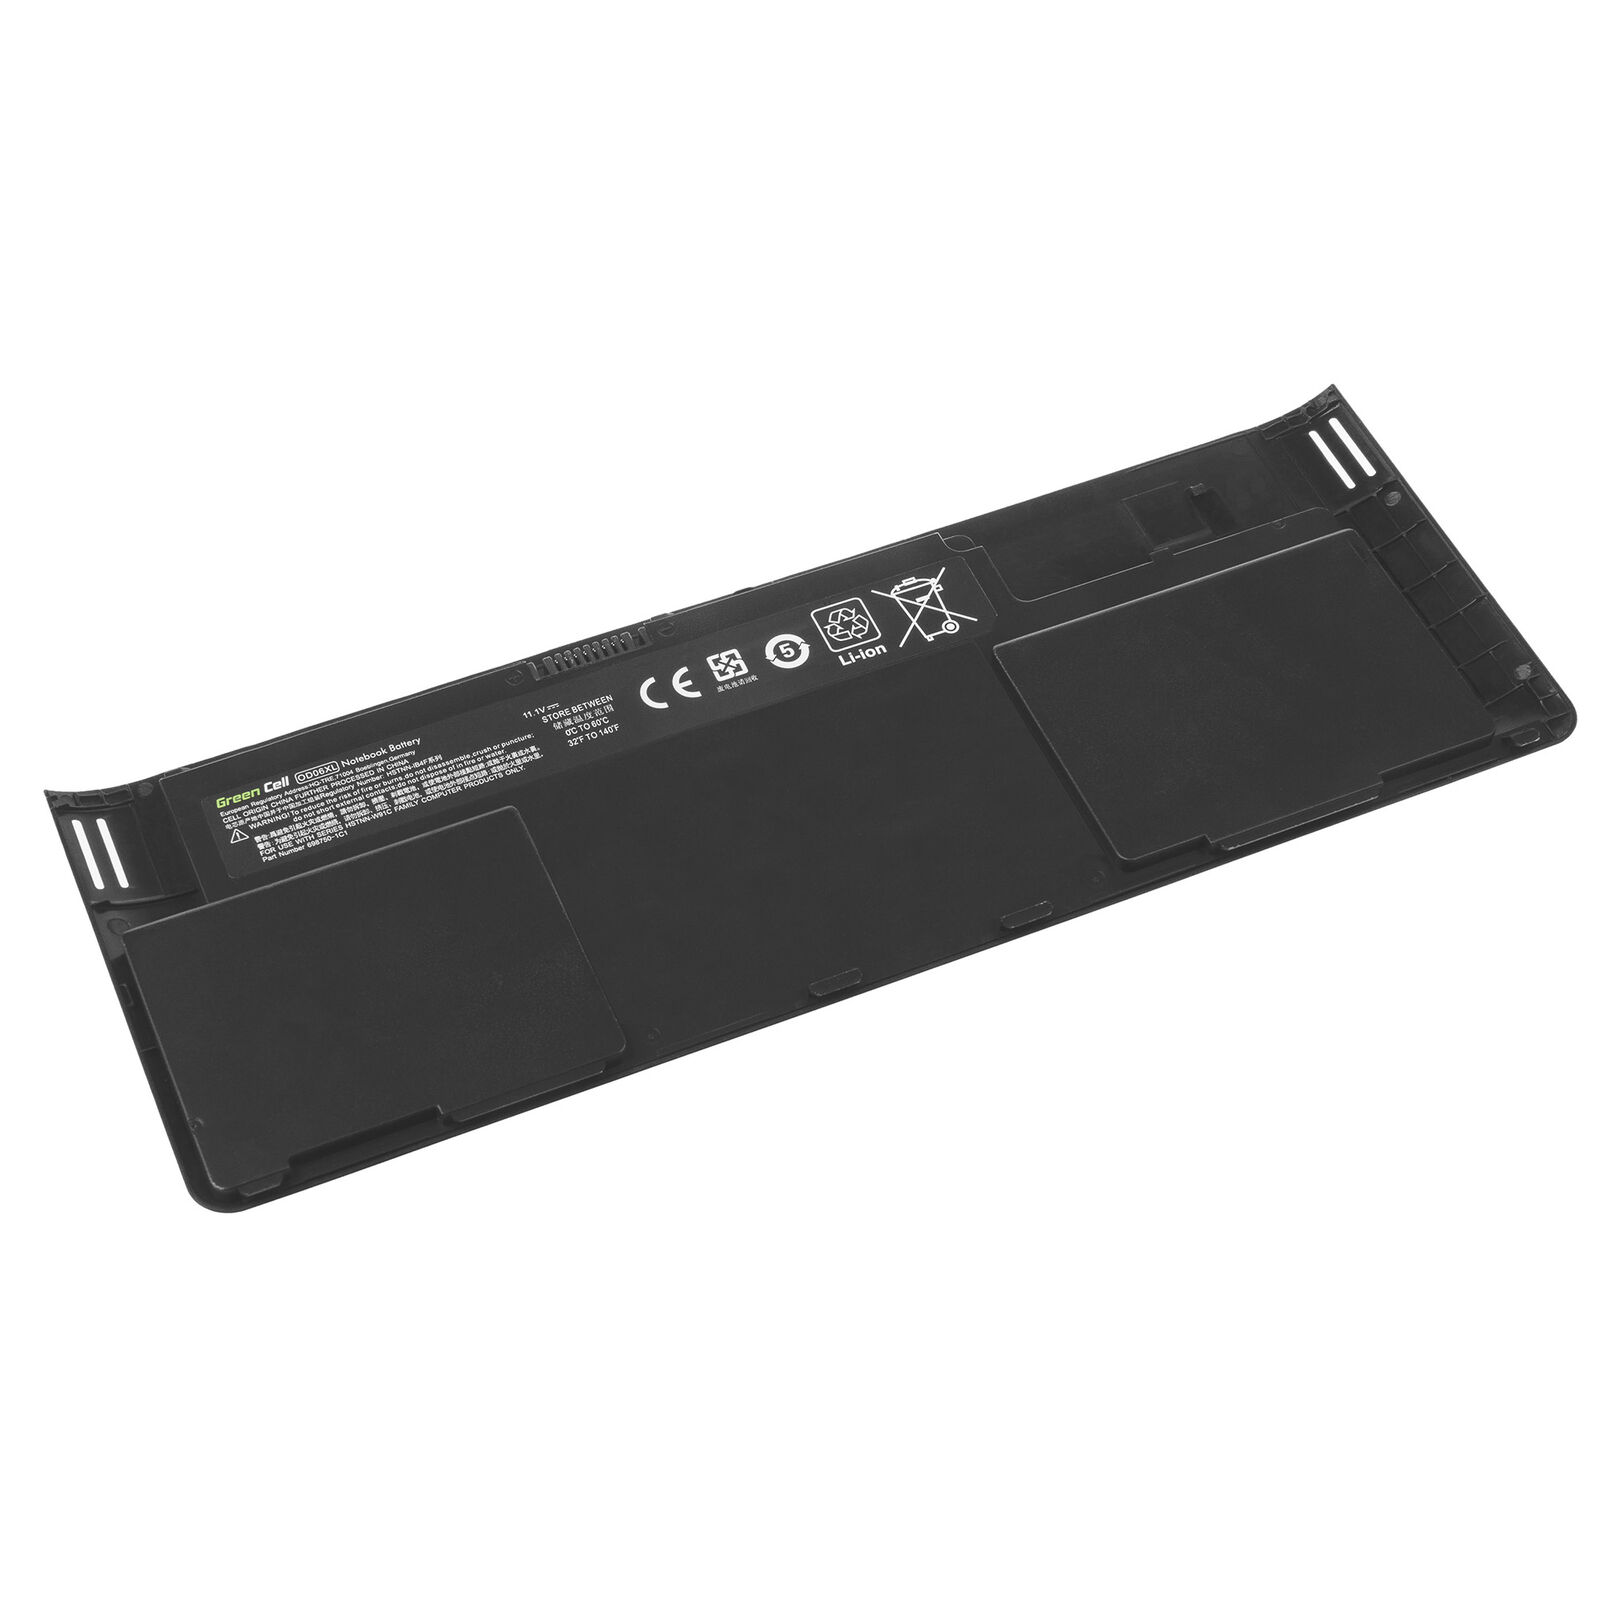 OD06XL H6L25AA HSTNN-W91C 698943-001 HP EliteBook Revolve 810 G1 G2 kompatibelt batterier